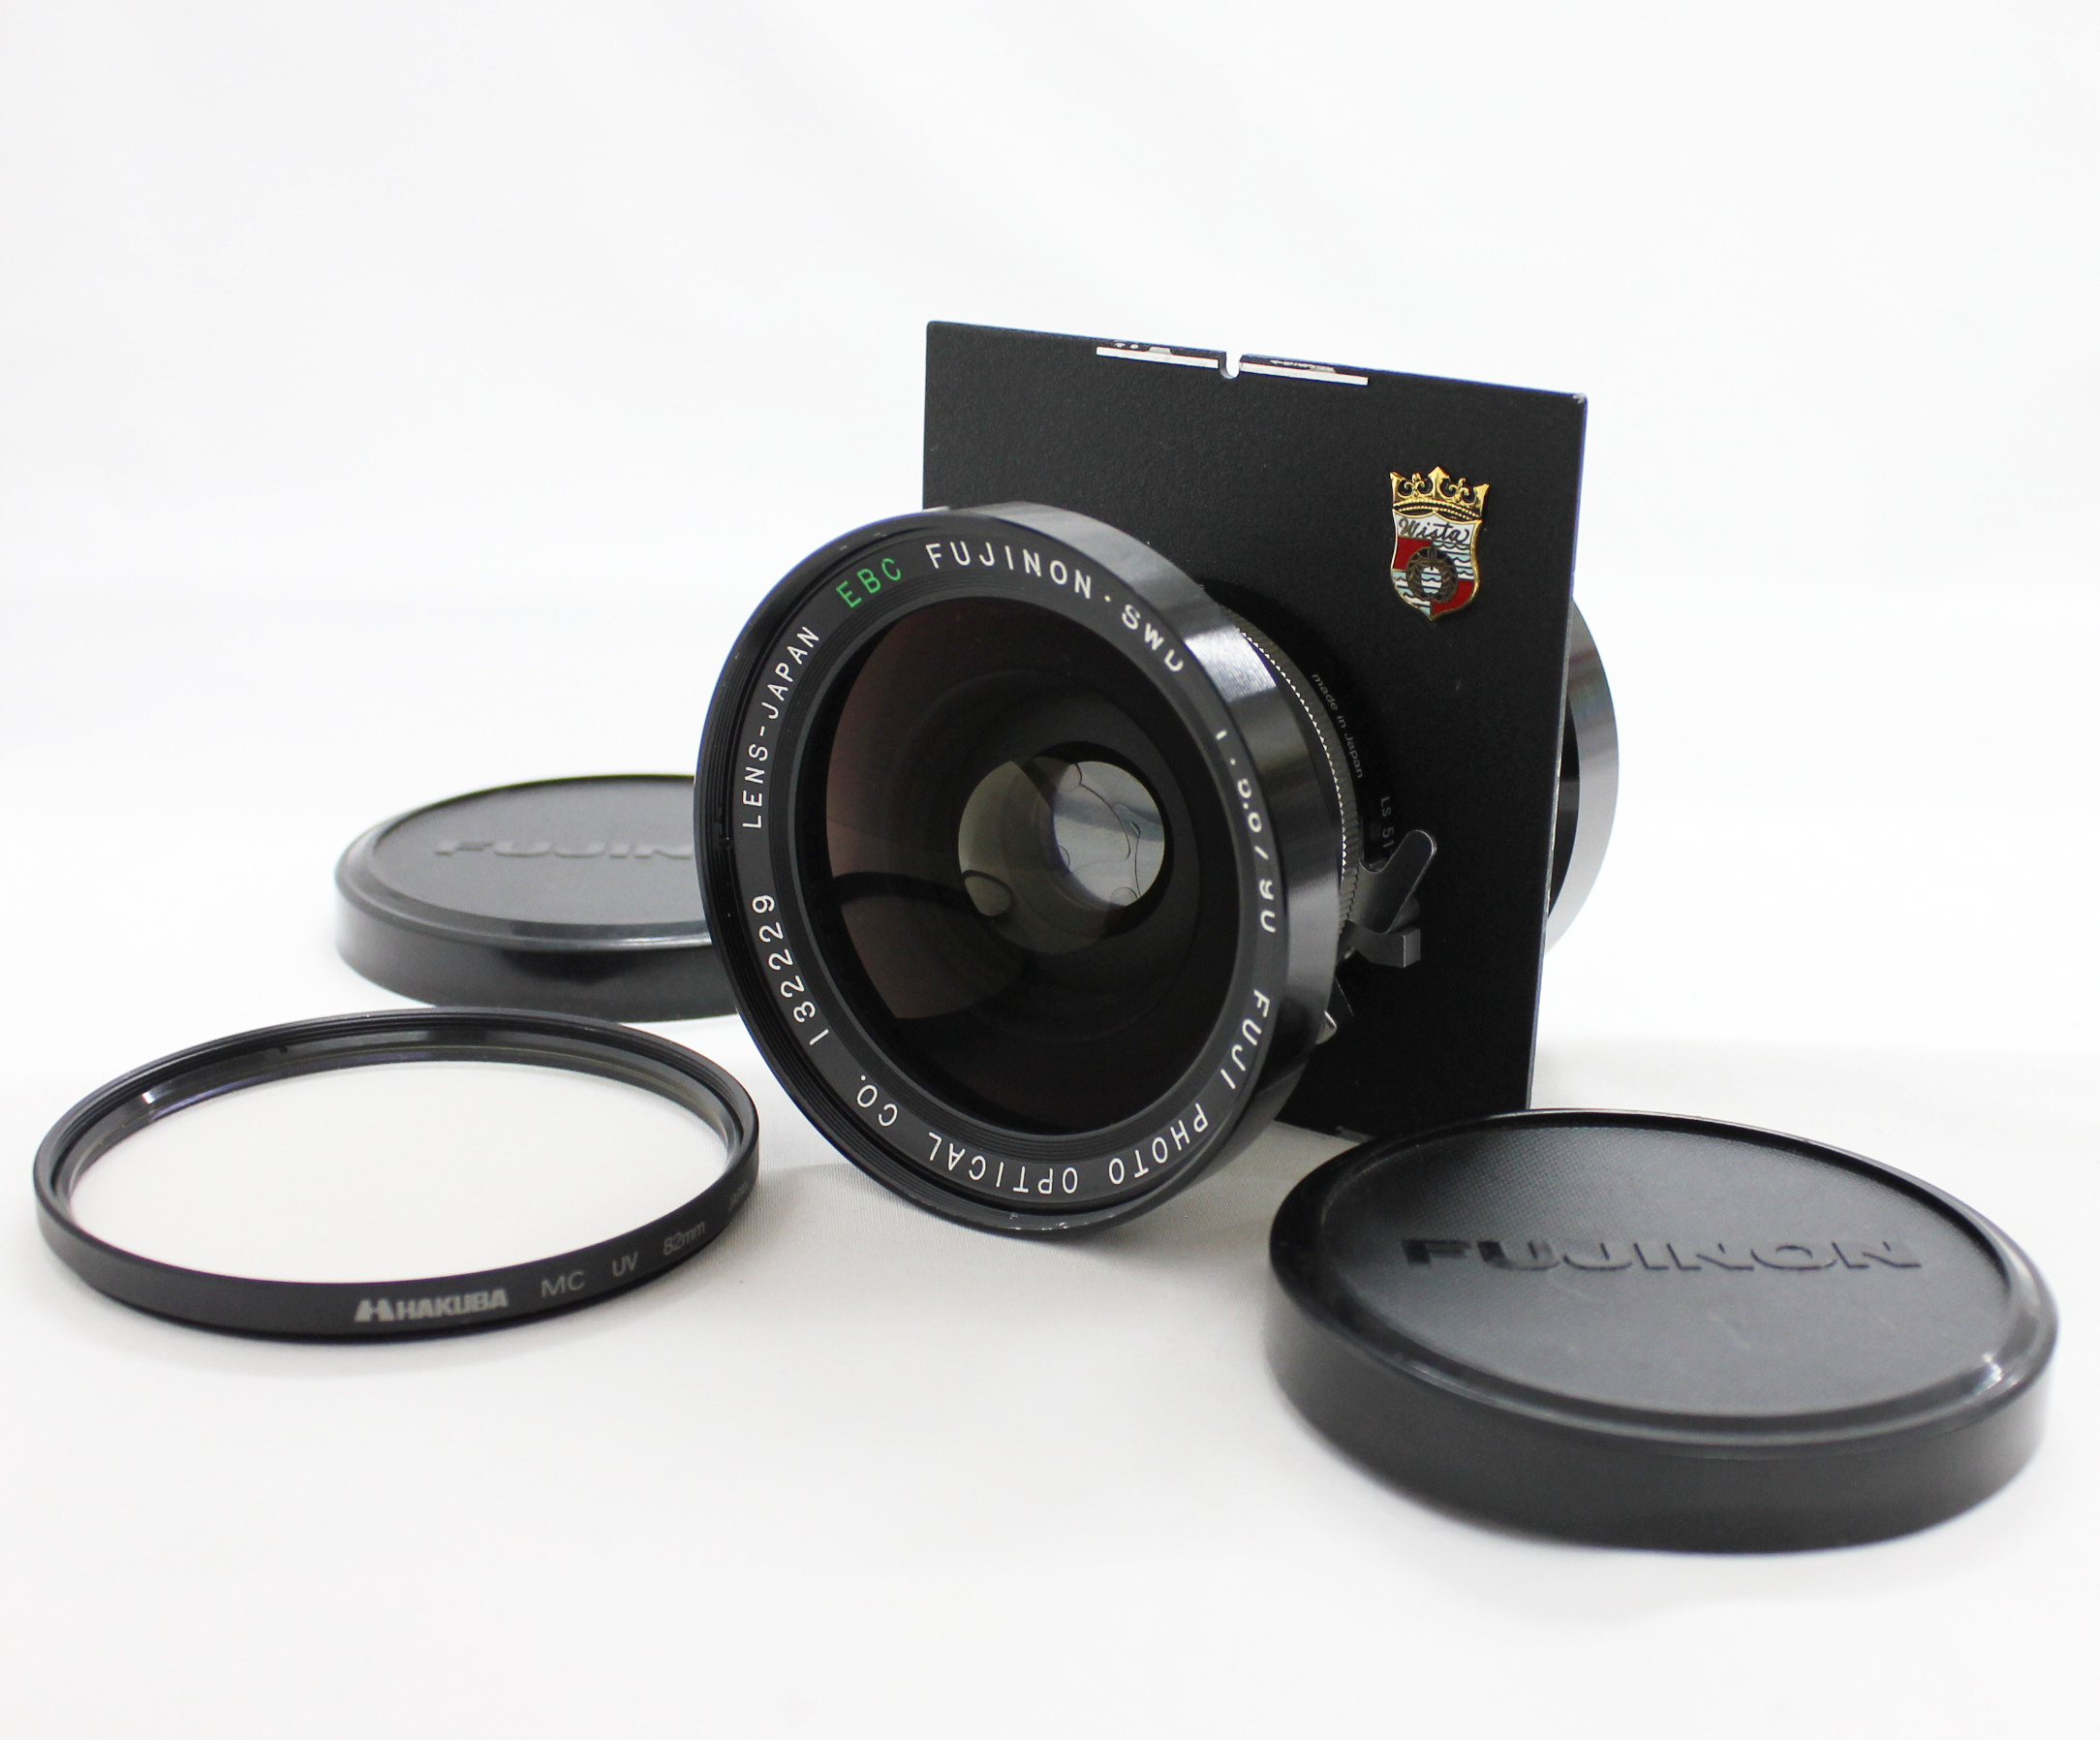 Fuji EBC Fujinon SWD 90mm F/5.6 4x5 Large Format Lens with Seiko Shutter  from Japan (C1502) | Big Fish J-Camera (Big Fish J-Shop)